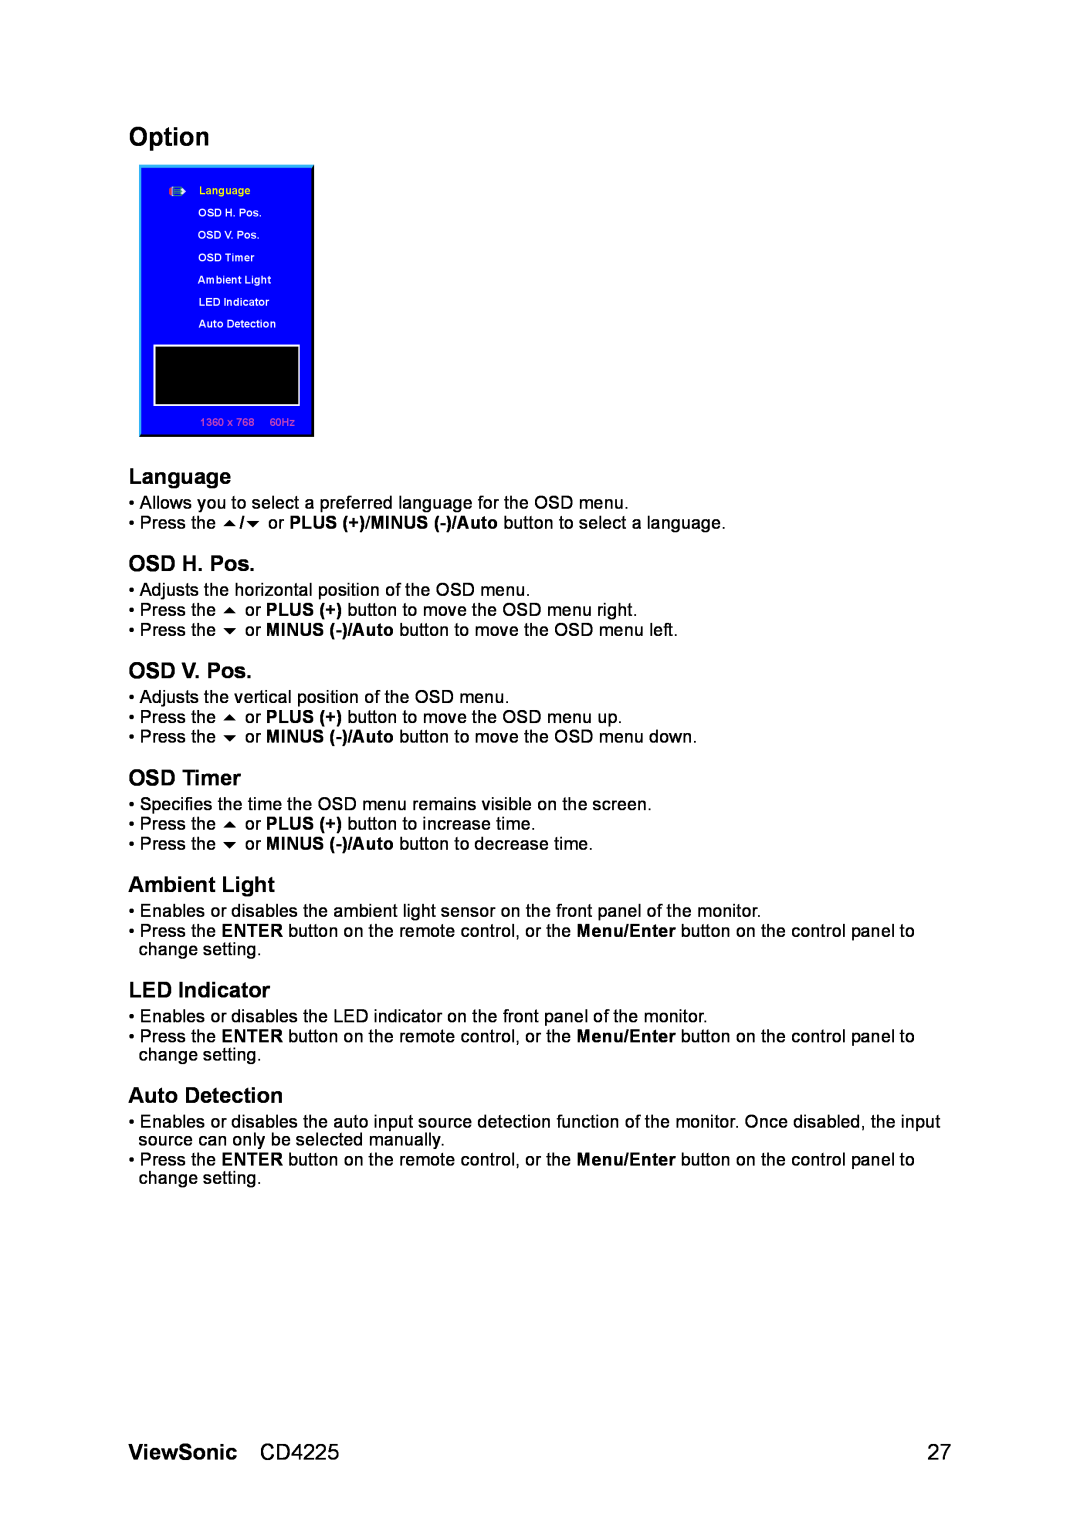 ViewSonic CD4225 manual Option, Language, OSD H. Pos, OSD V. Pos, OSD Timer, Ambient Light, LED Indicator, Auto Detection 